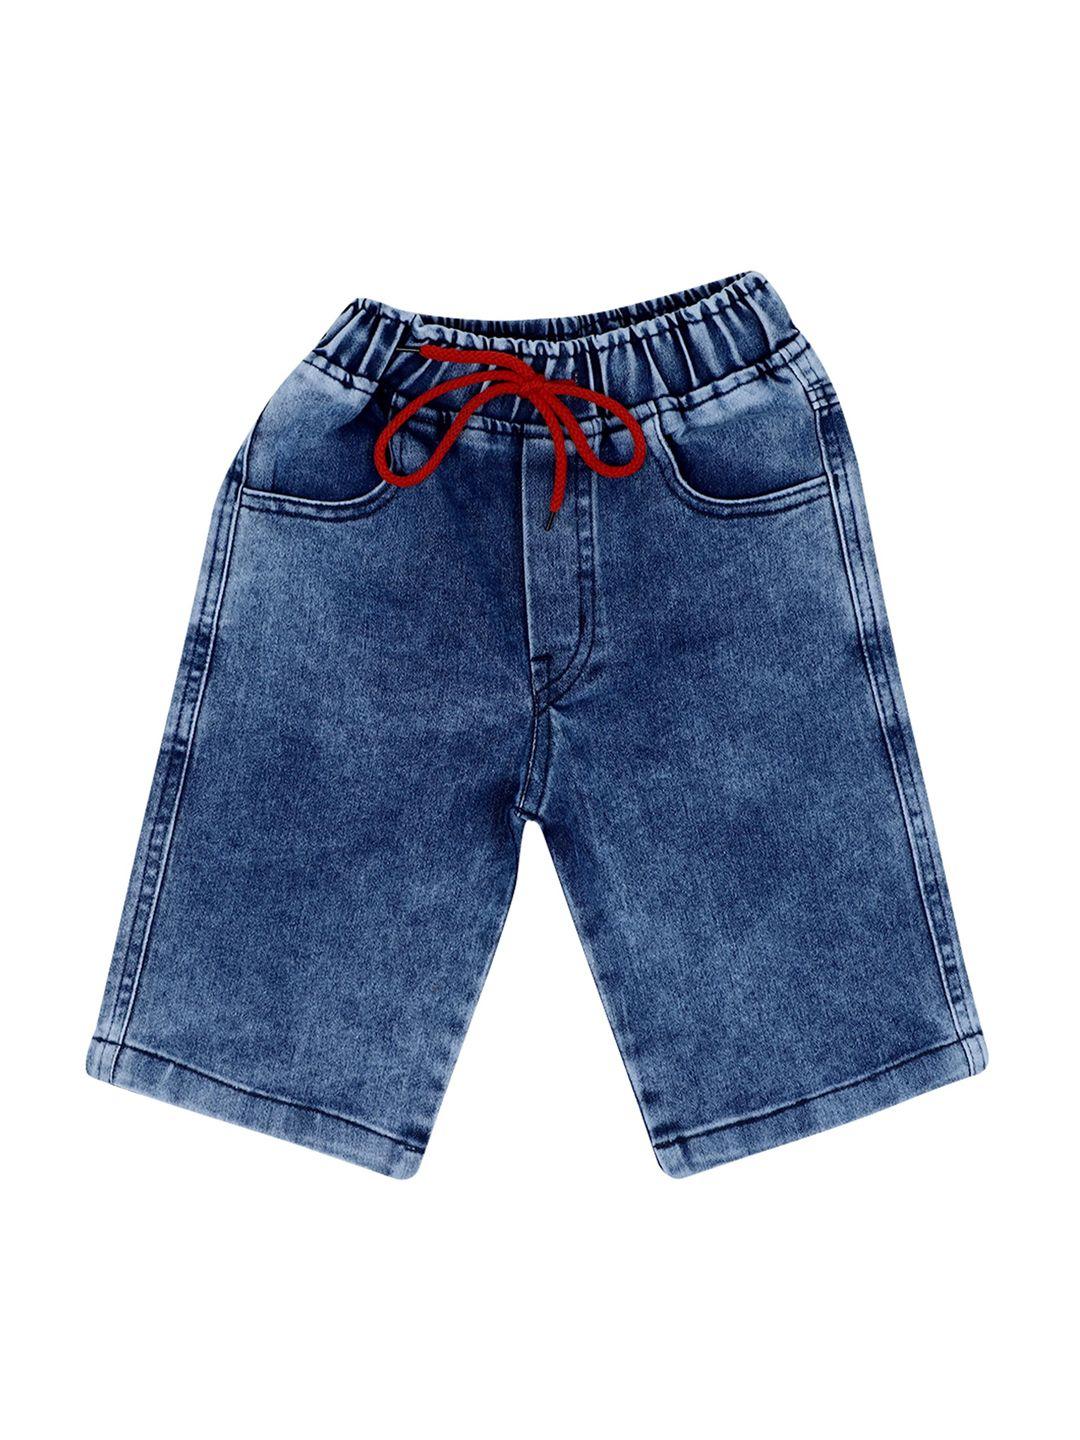 cremlin clothing boys blue denim shorts